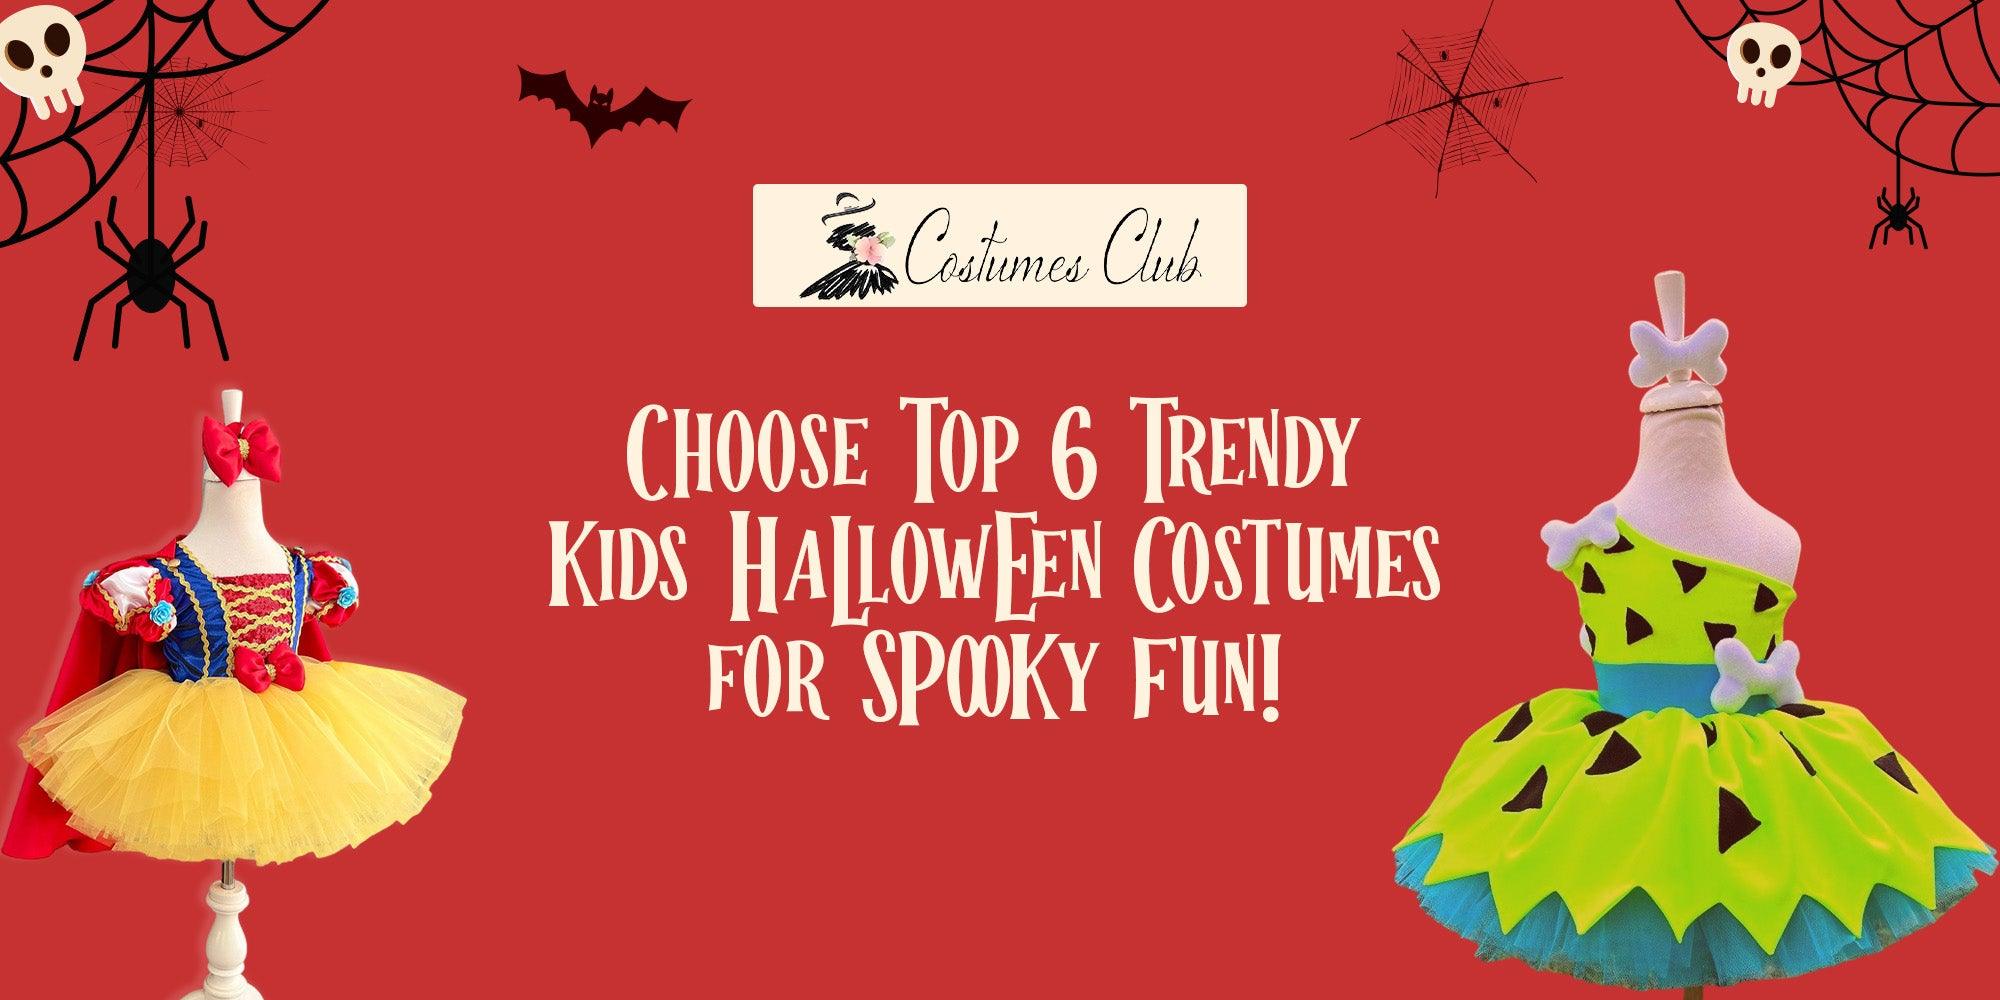 Choose Top 6 Trendy Kids Halloween Costumes for Spooky Fun! - Costumes Club